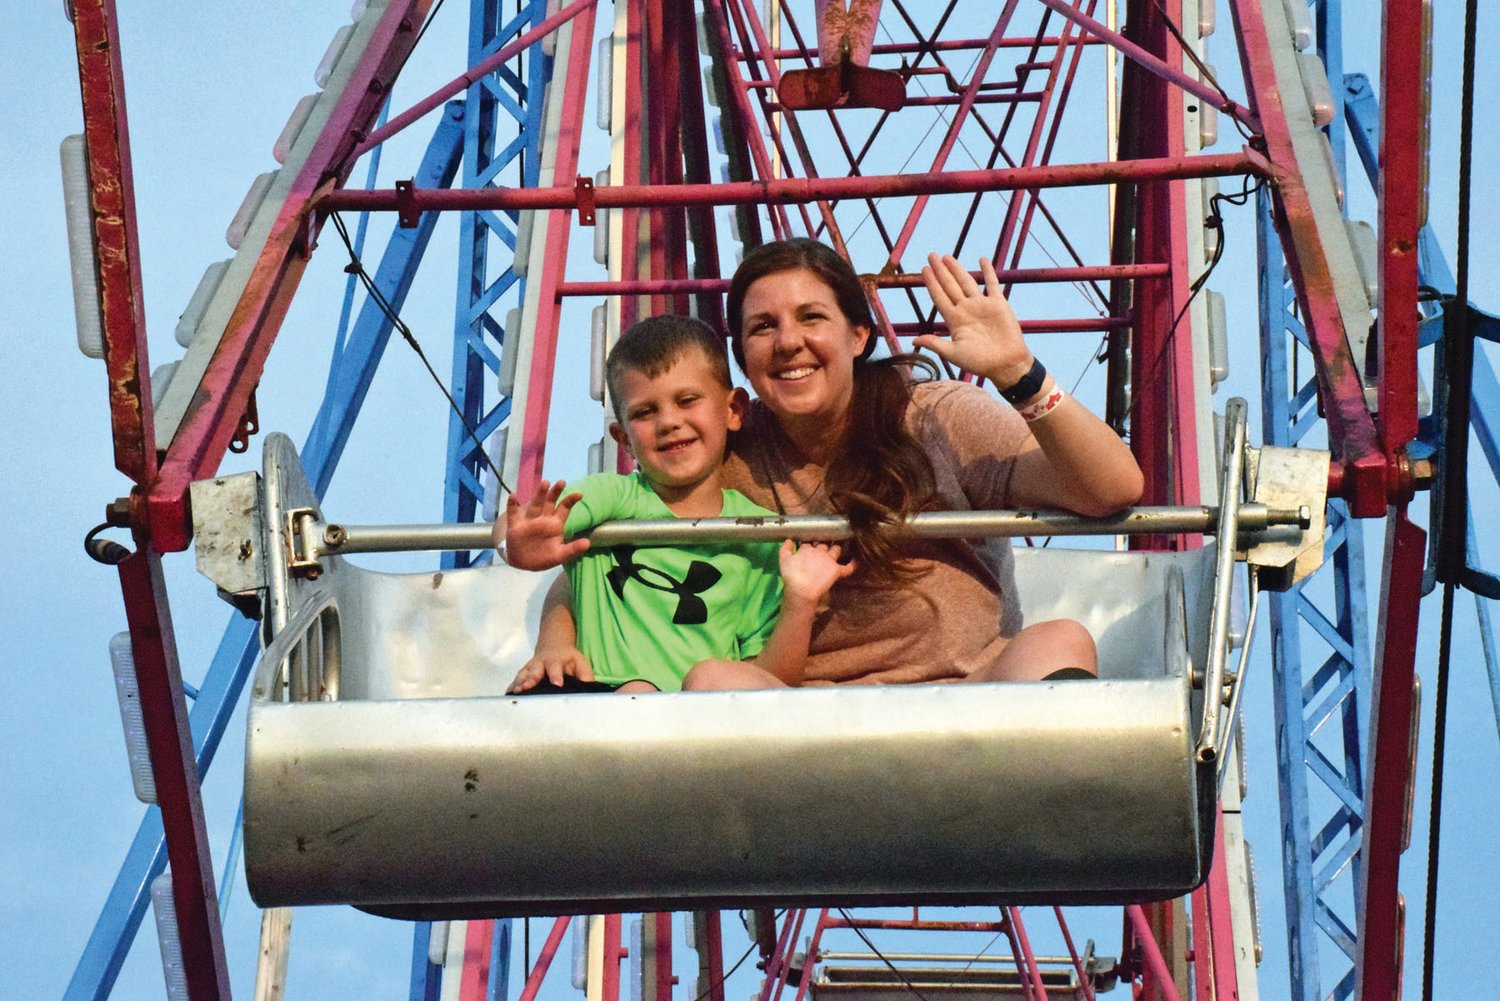 Heather McKiernan of Hilltown rides the Ferris wheel with her son, Rowan.